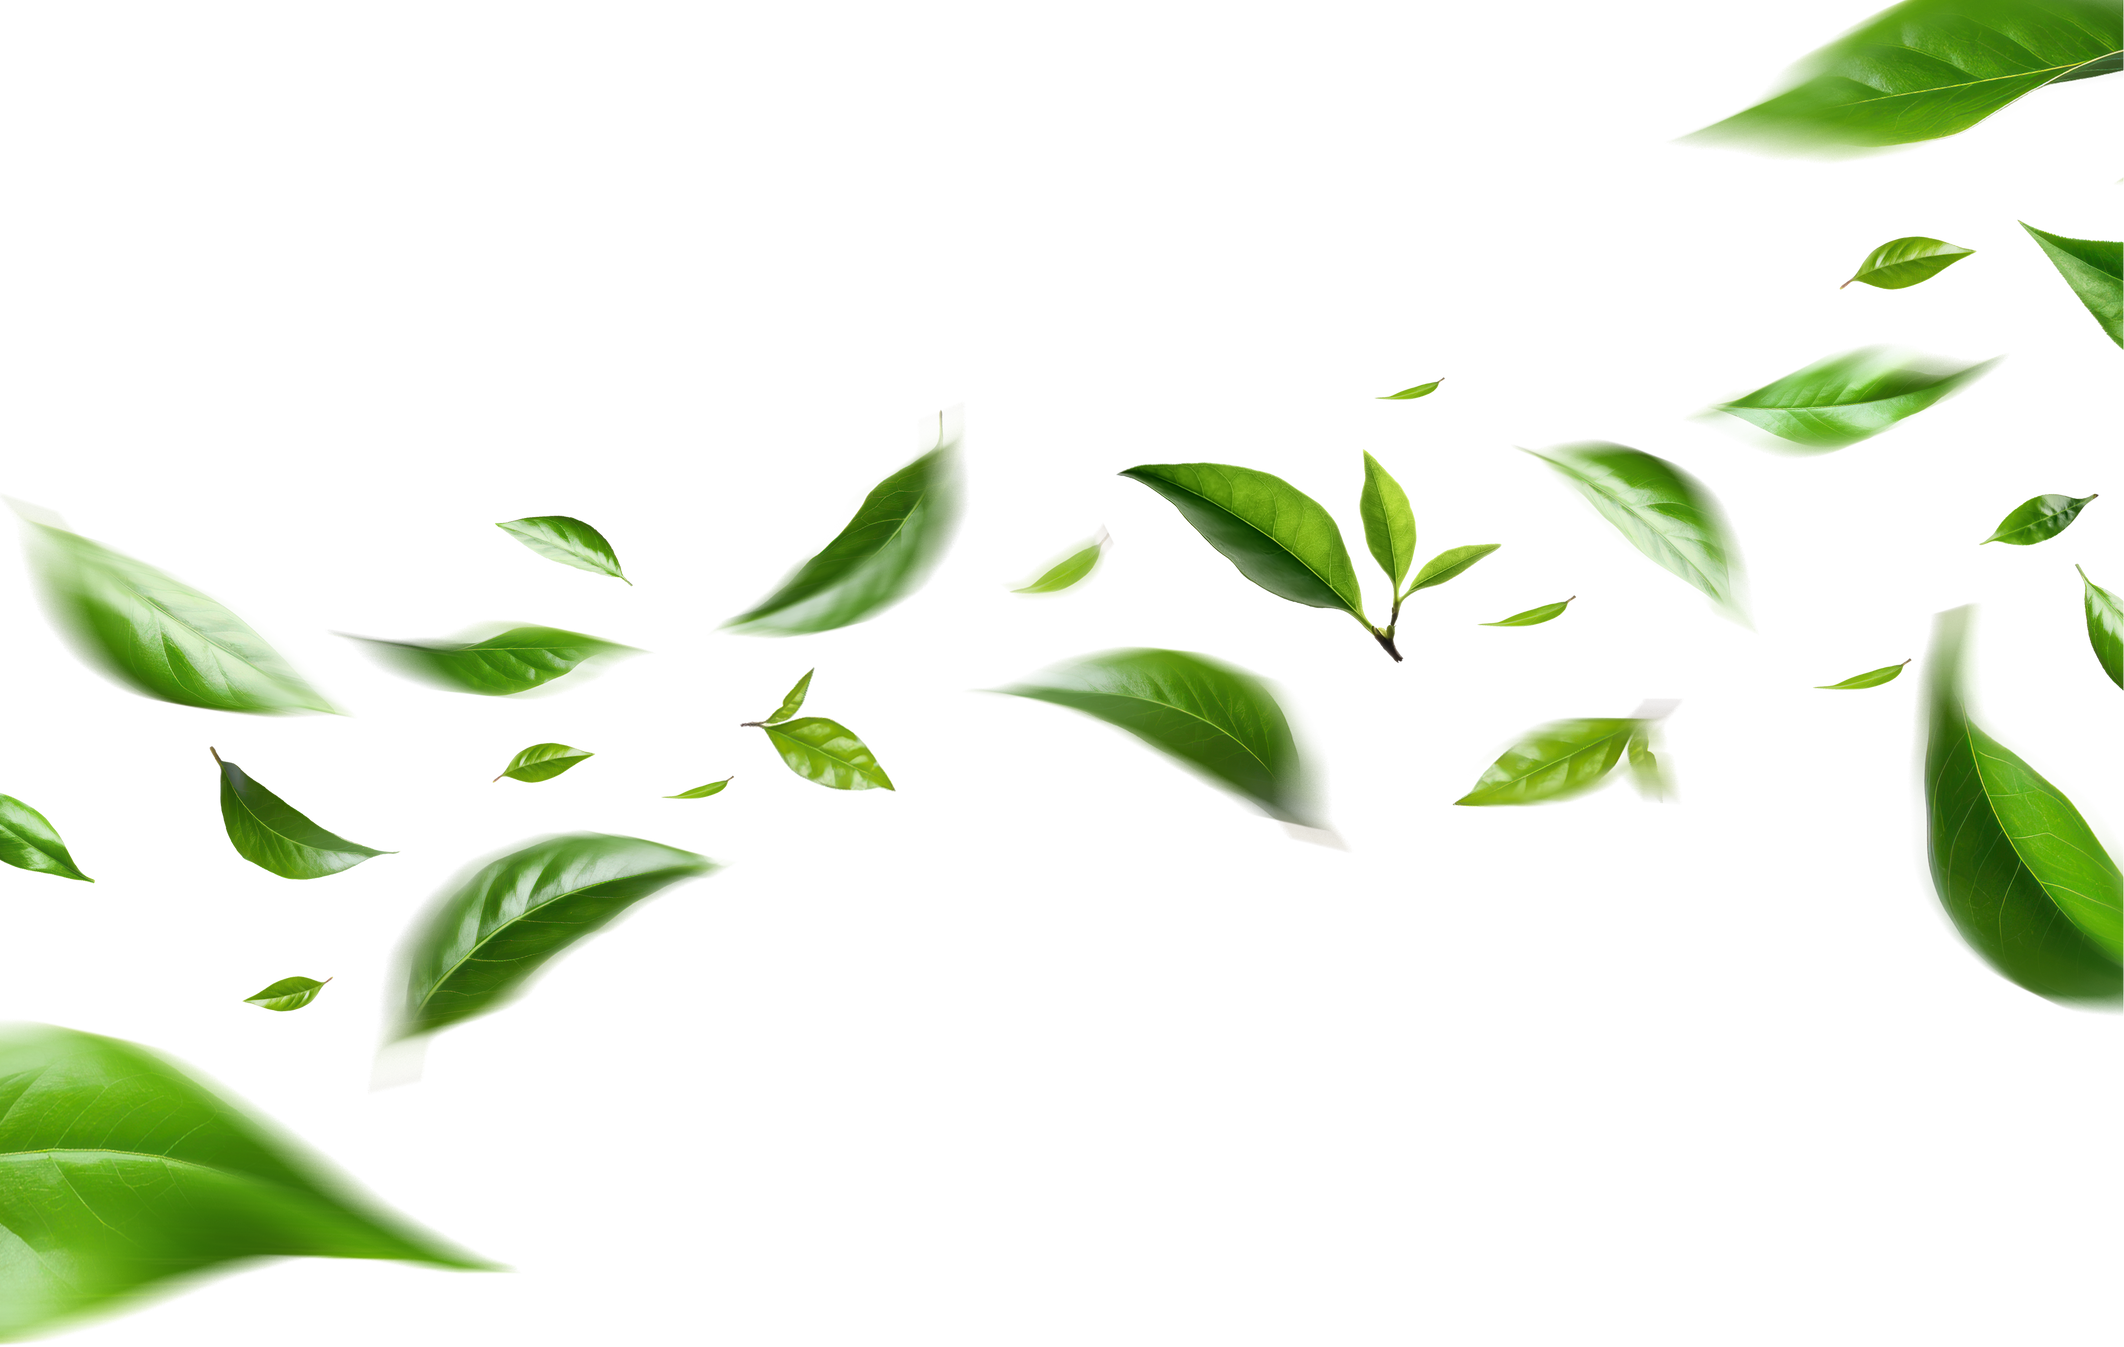 Green Floating Leaves Flying Leaves Green Leaf Dancing, Air Purifier Atmosphere Simple Main Picture&#x9;